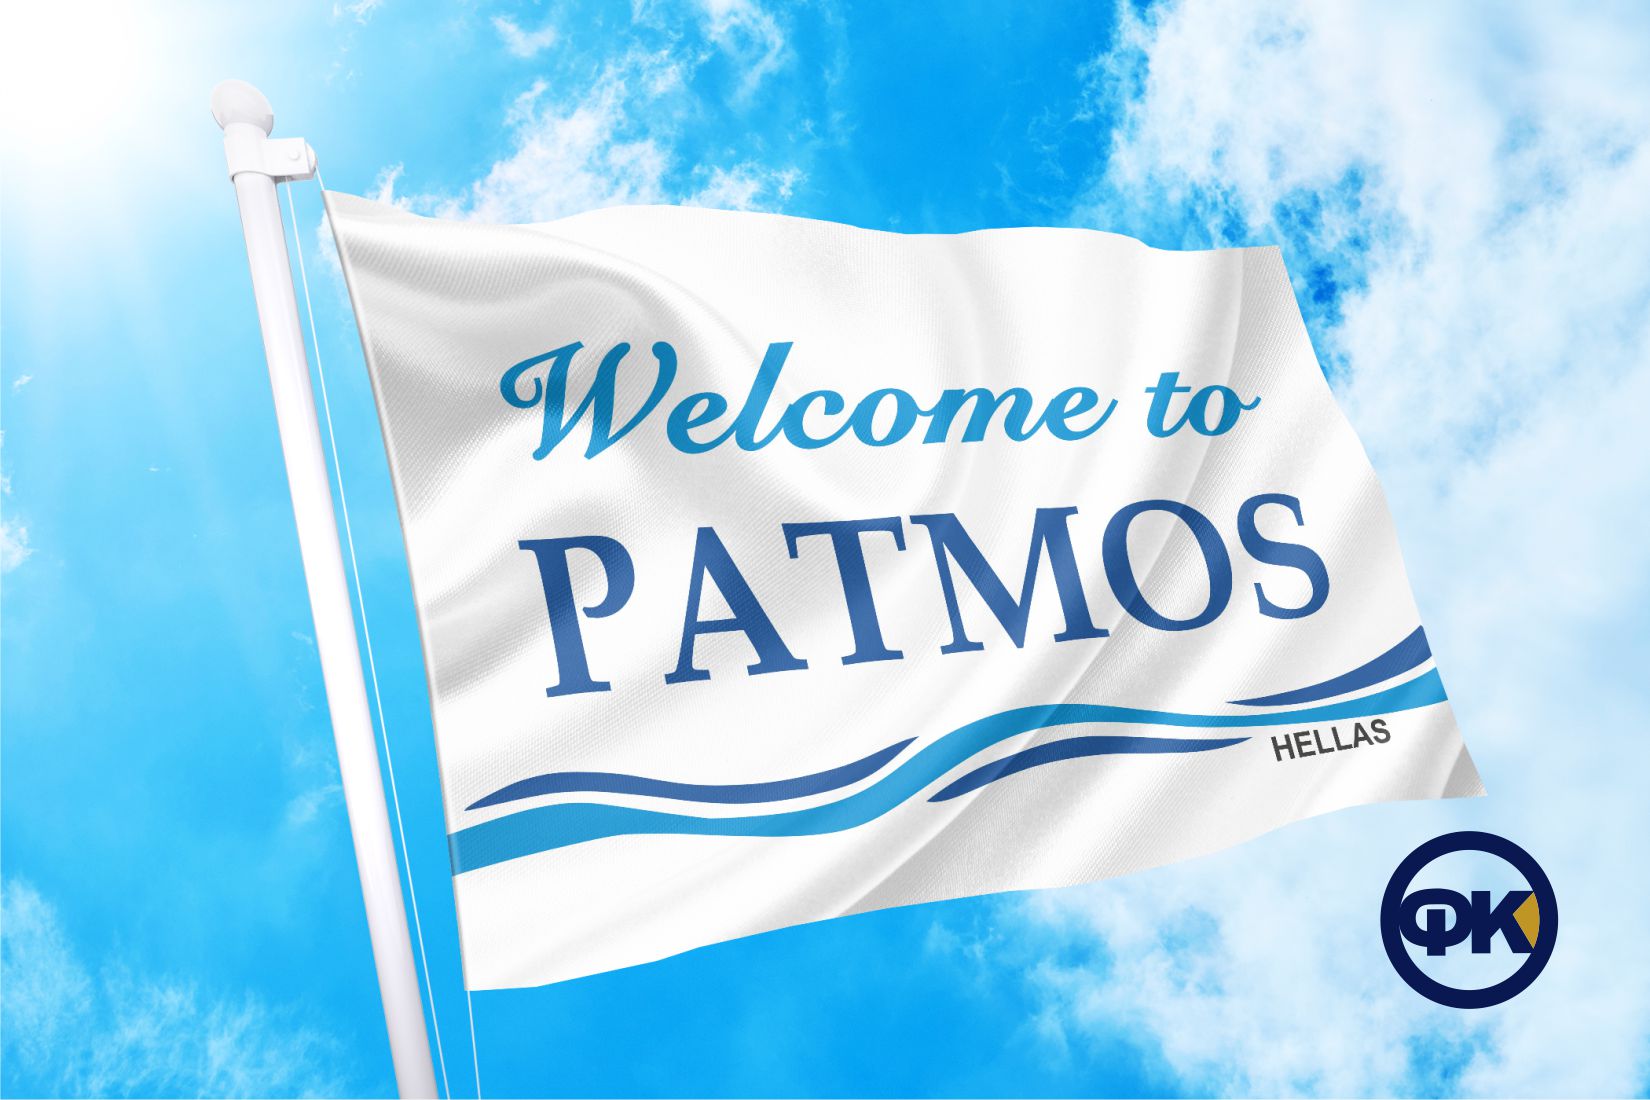 PATMOS WELCOME FLAG COCONIS FLAGS ΣΗΜΑΙΕΣ ΚΟΚΚΩΝΗΣ ΑΓΟΡΑ ΤΙΜΗ